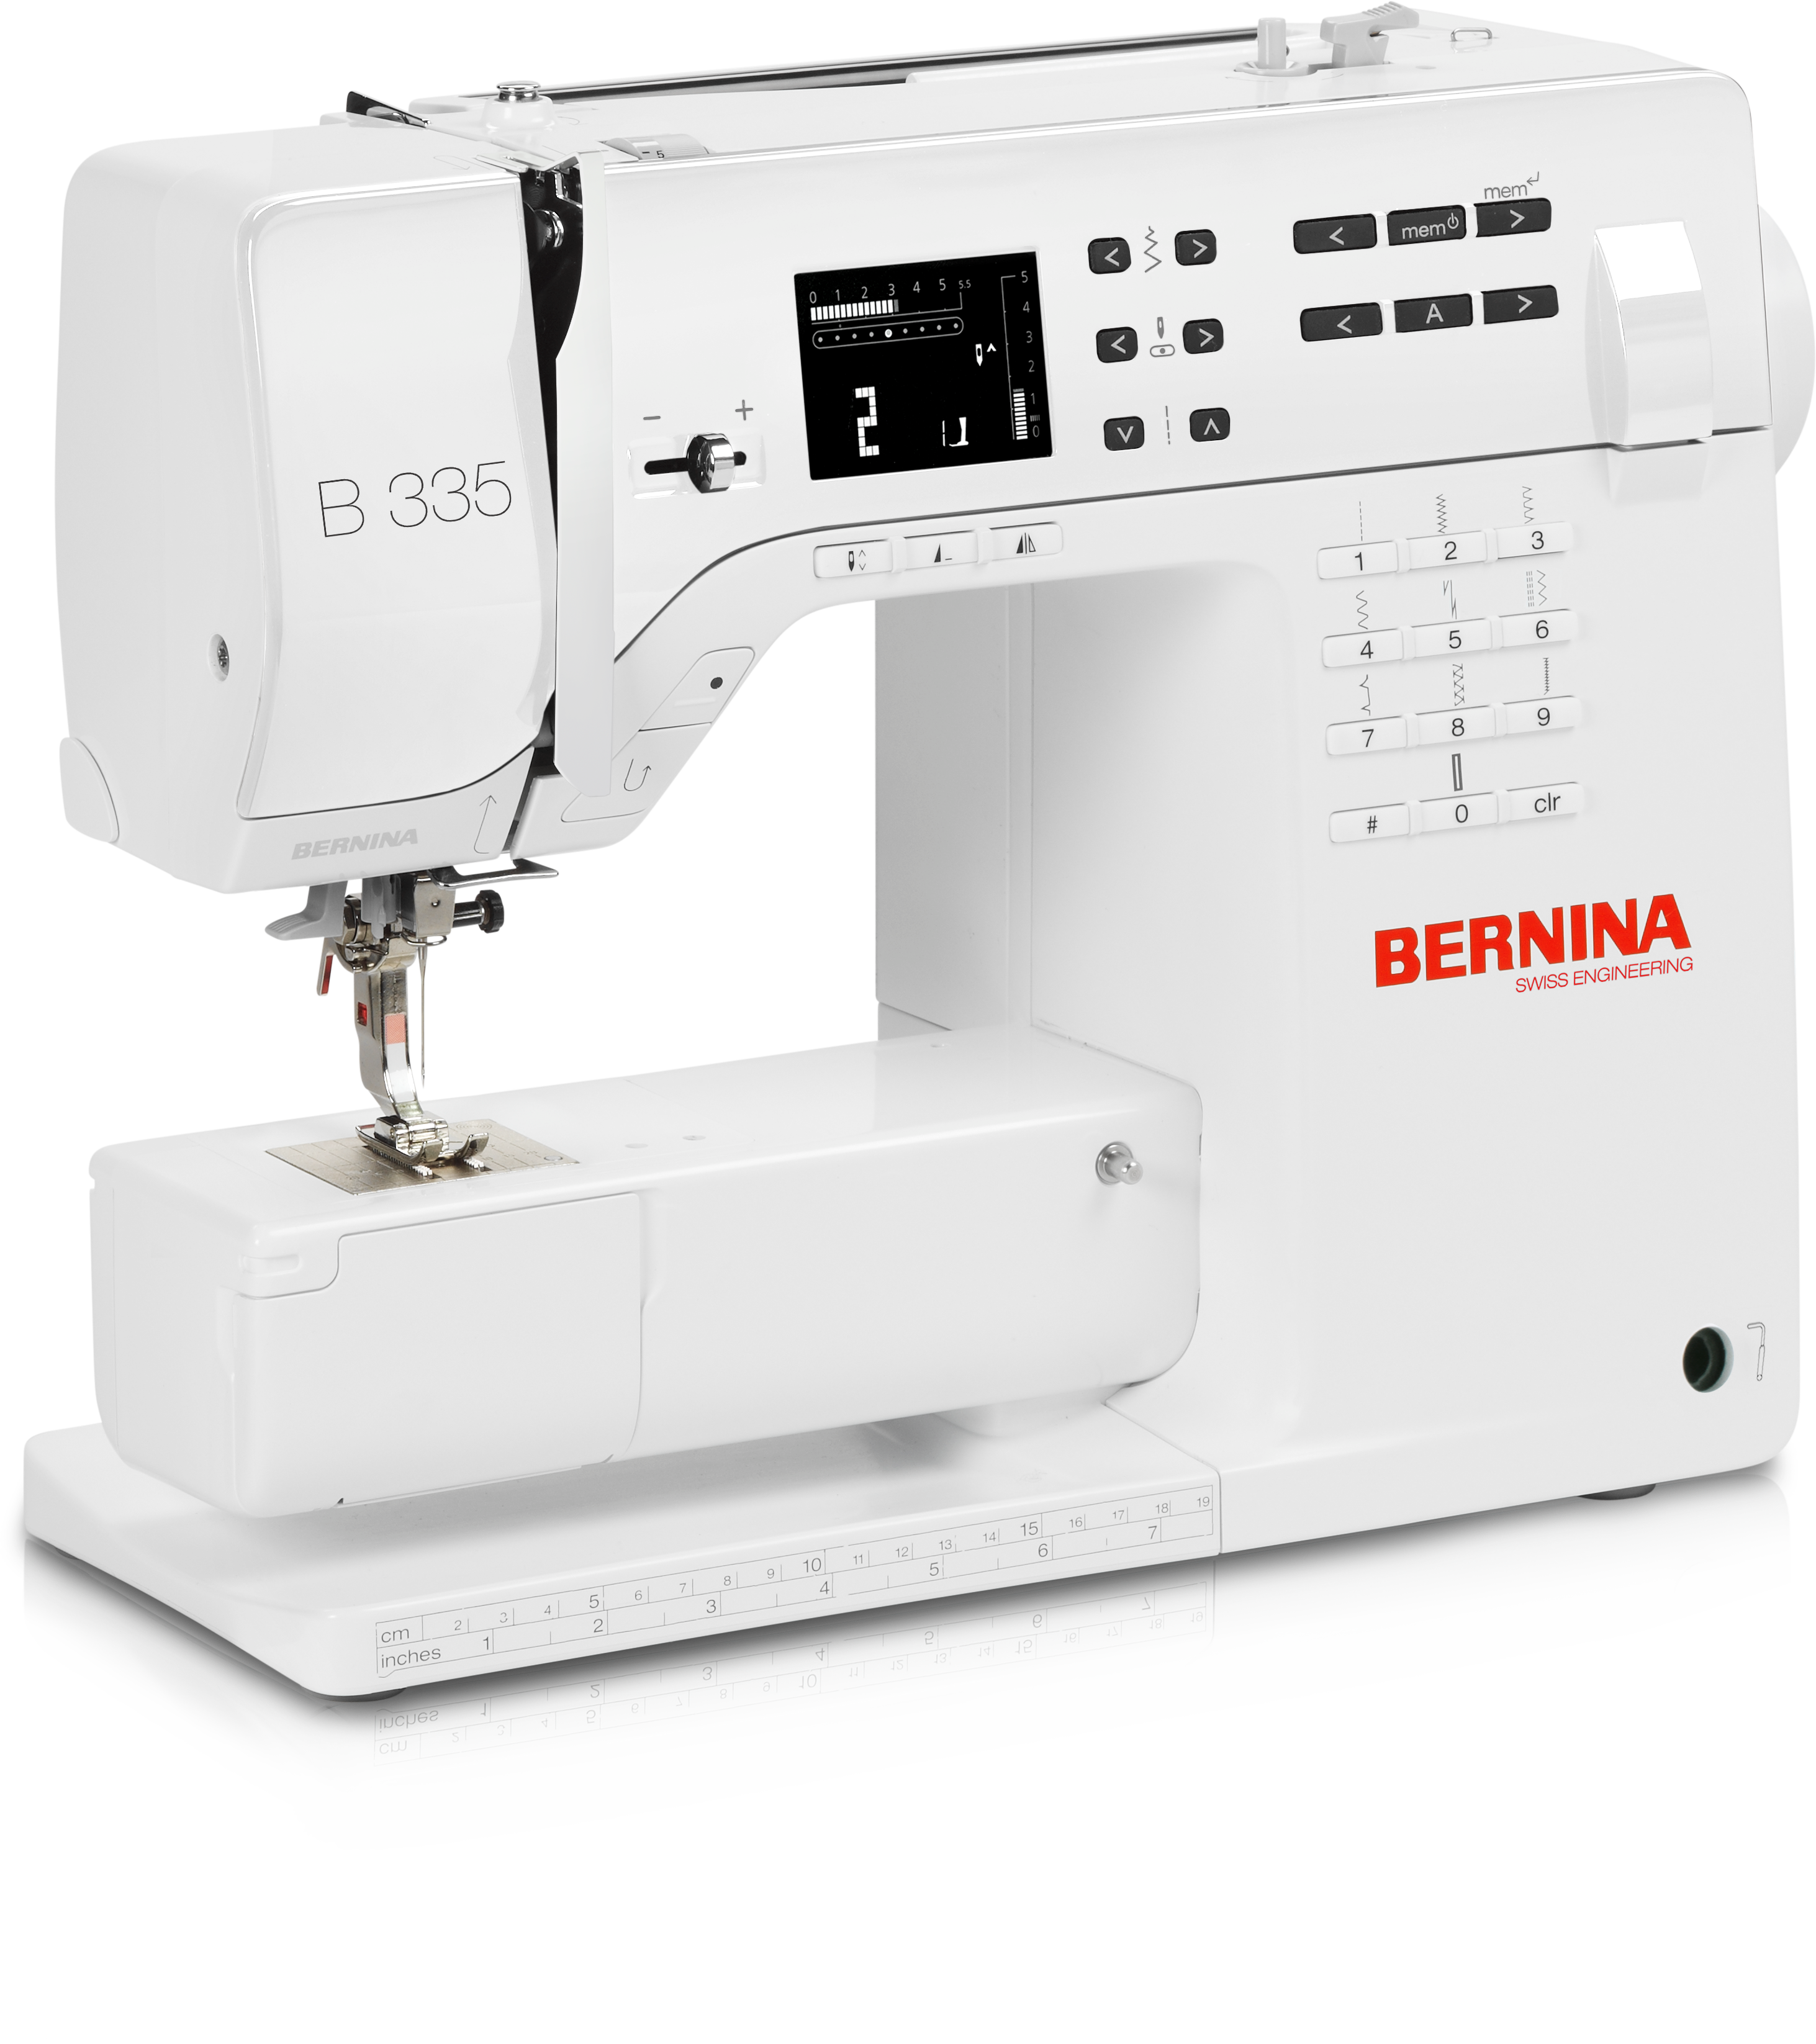 angled image of the BERNINA 335 Sewing Machine